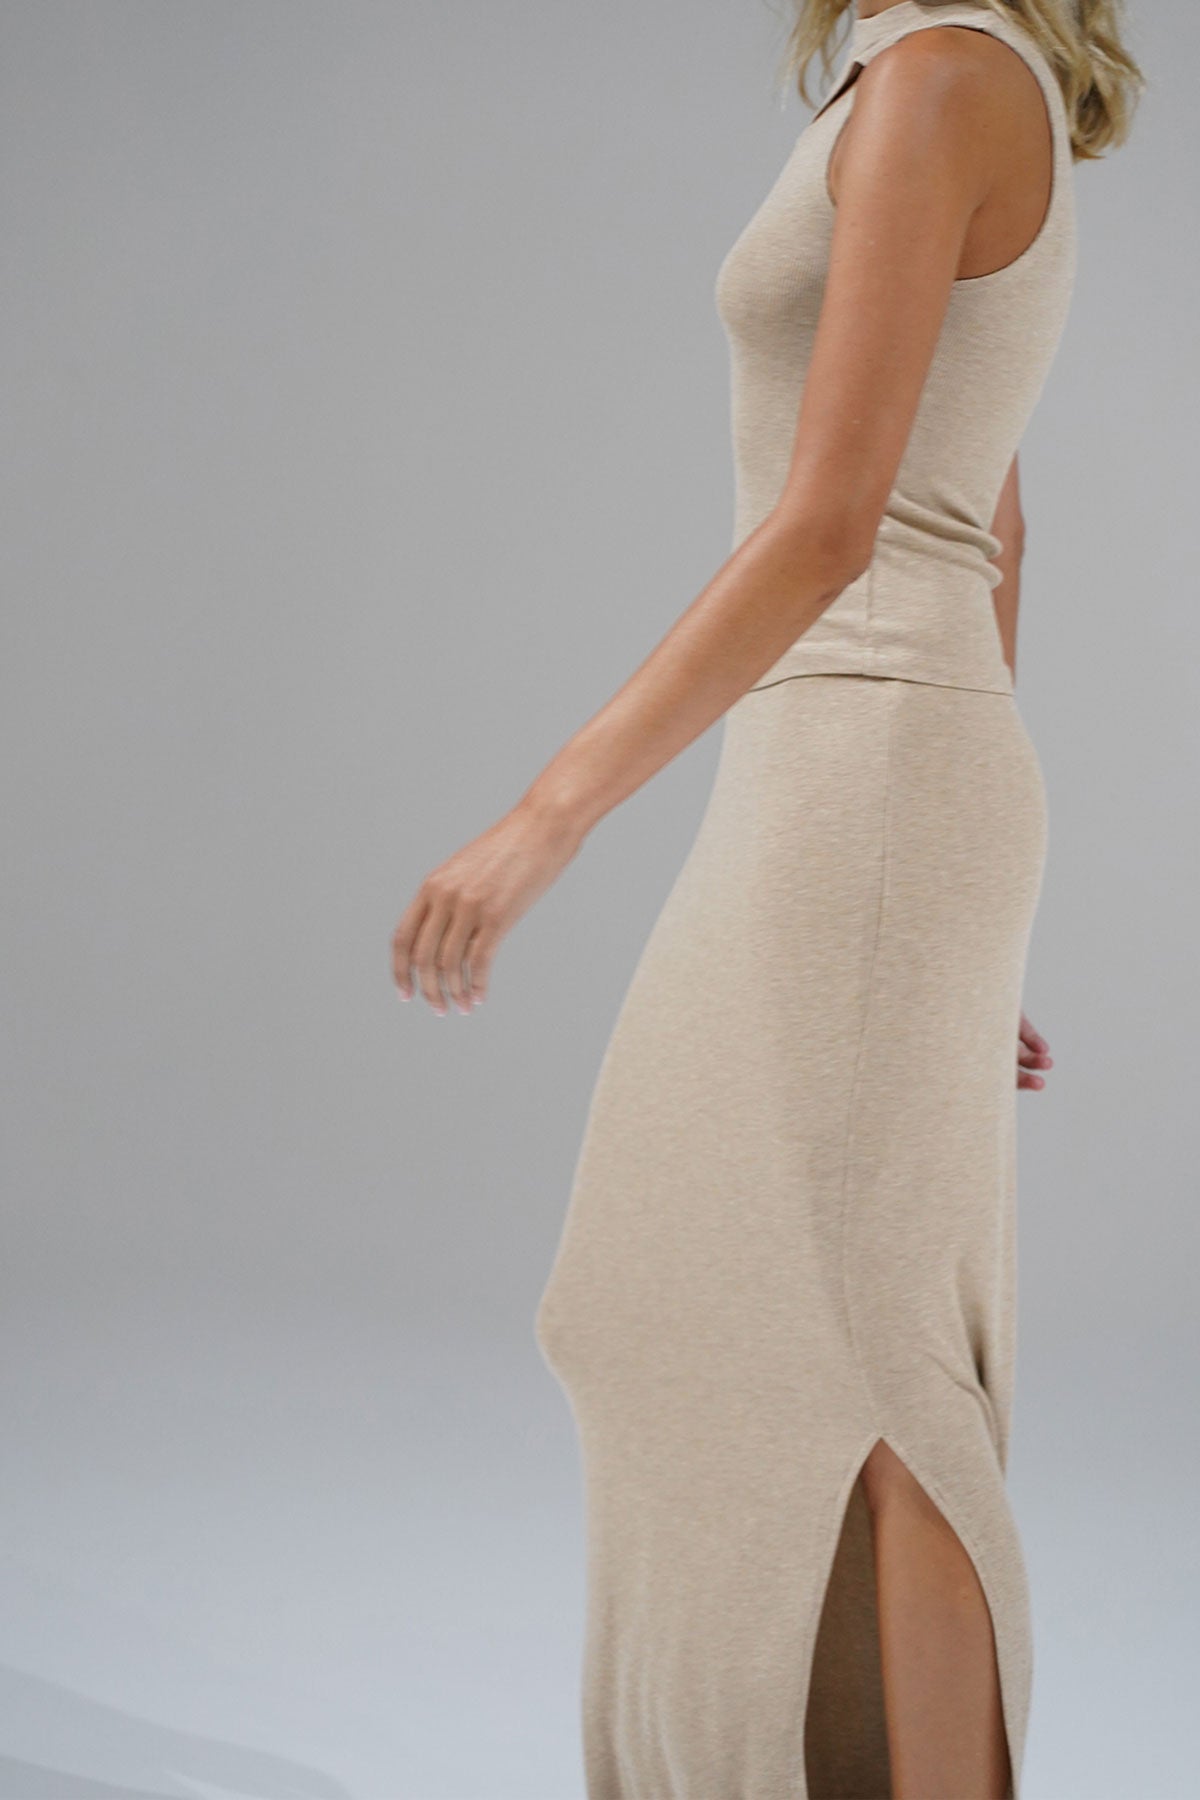 LNA Steph Rib Skirt in Heather Sand